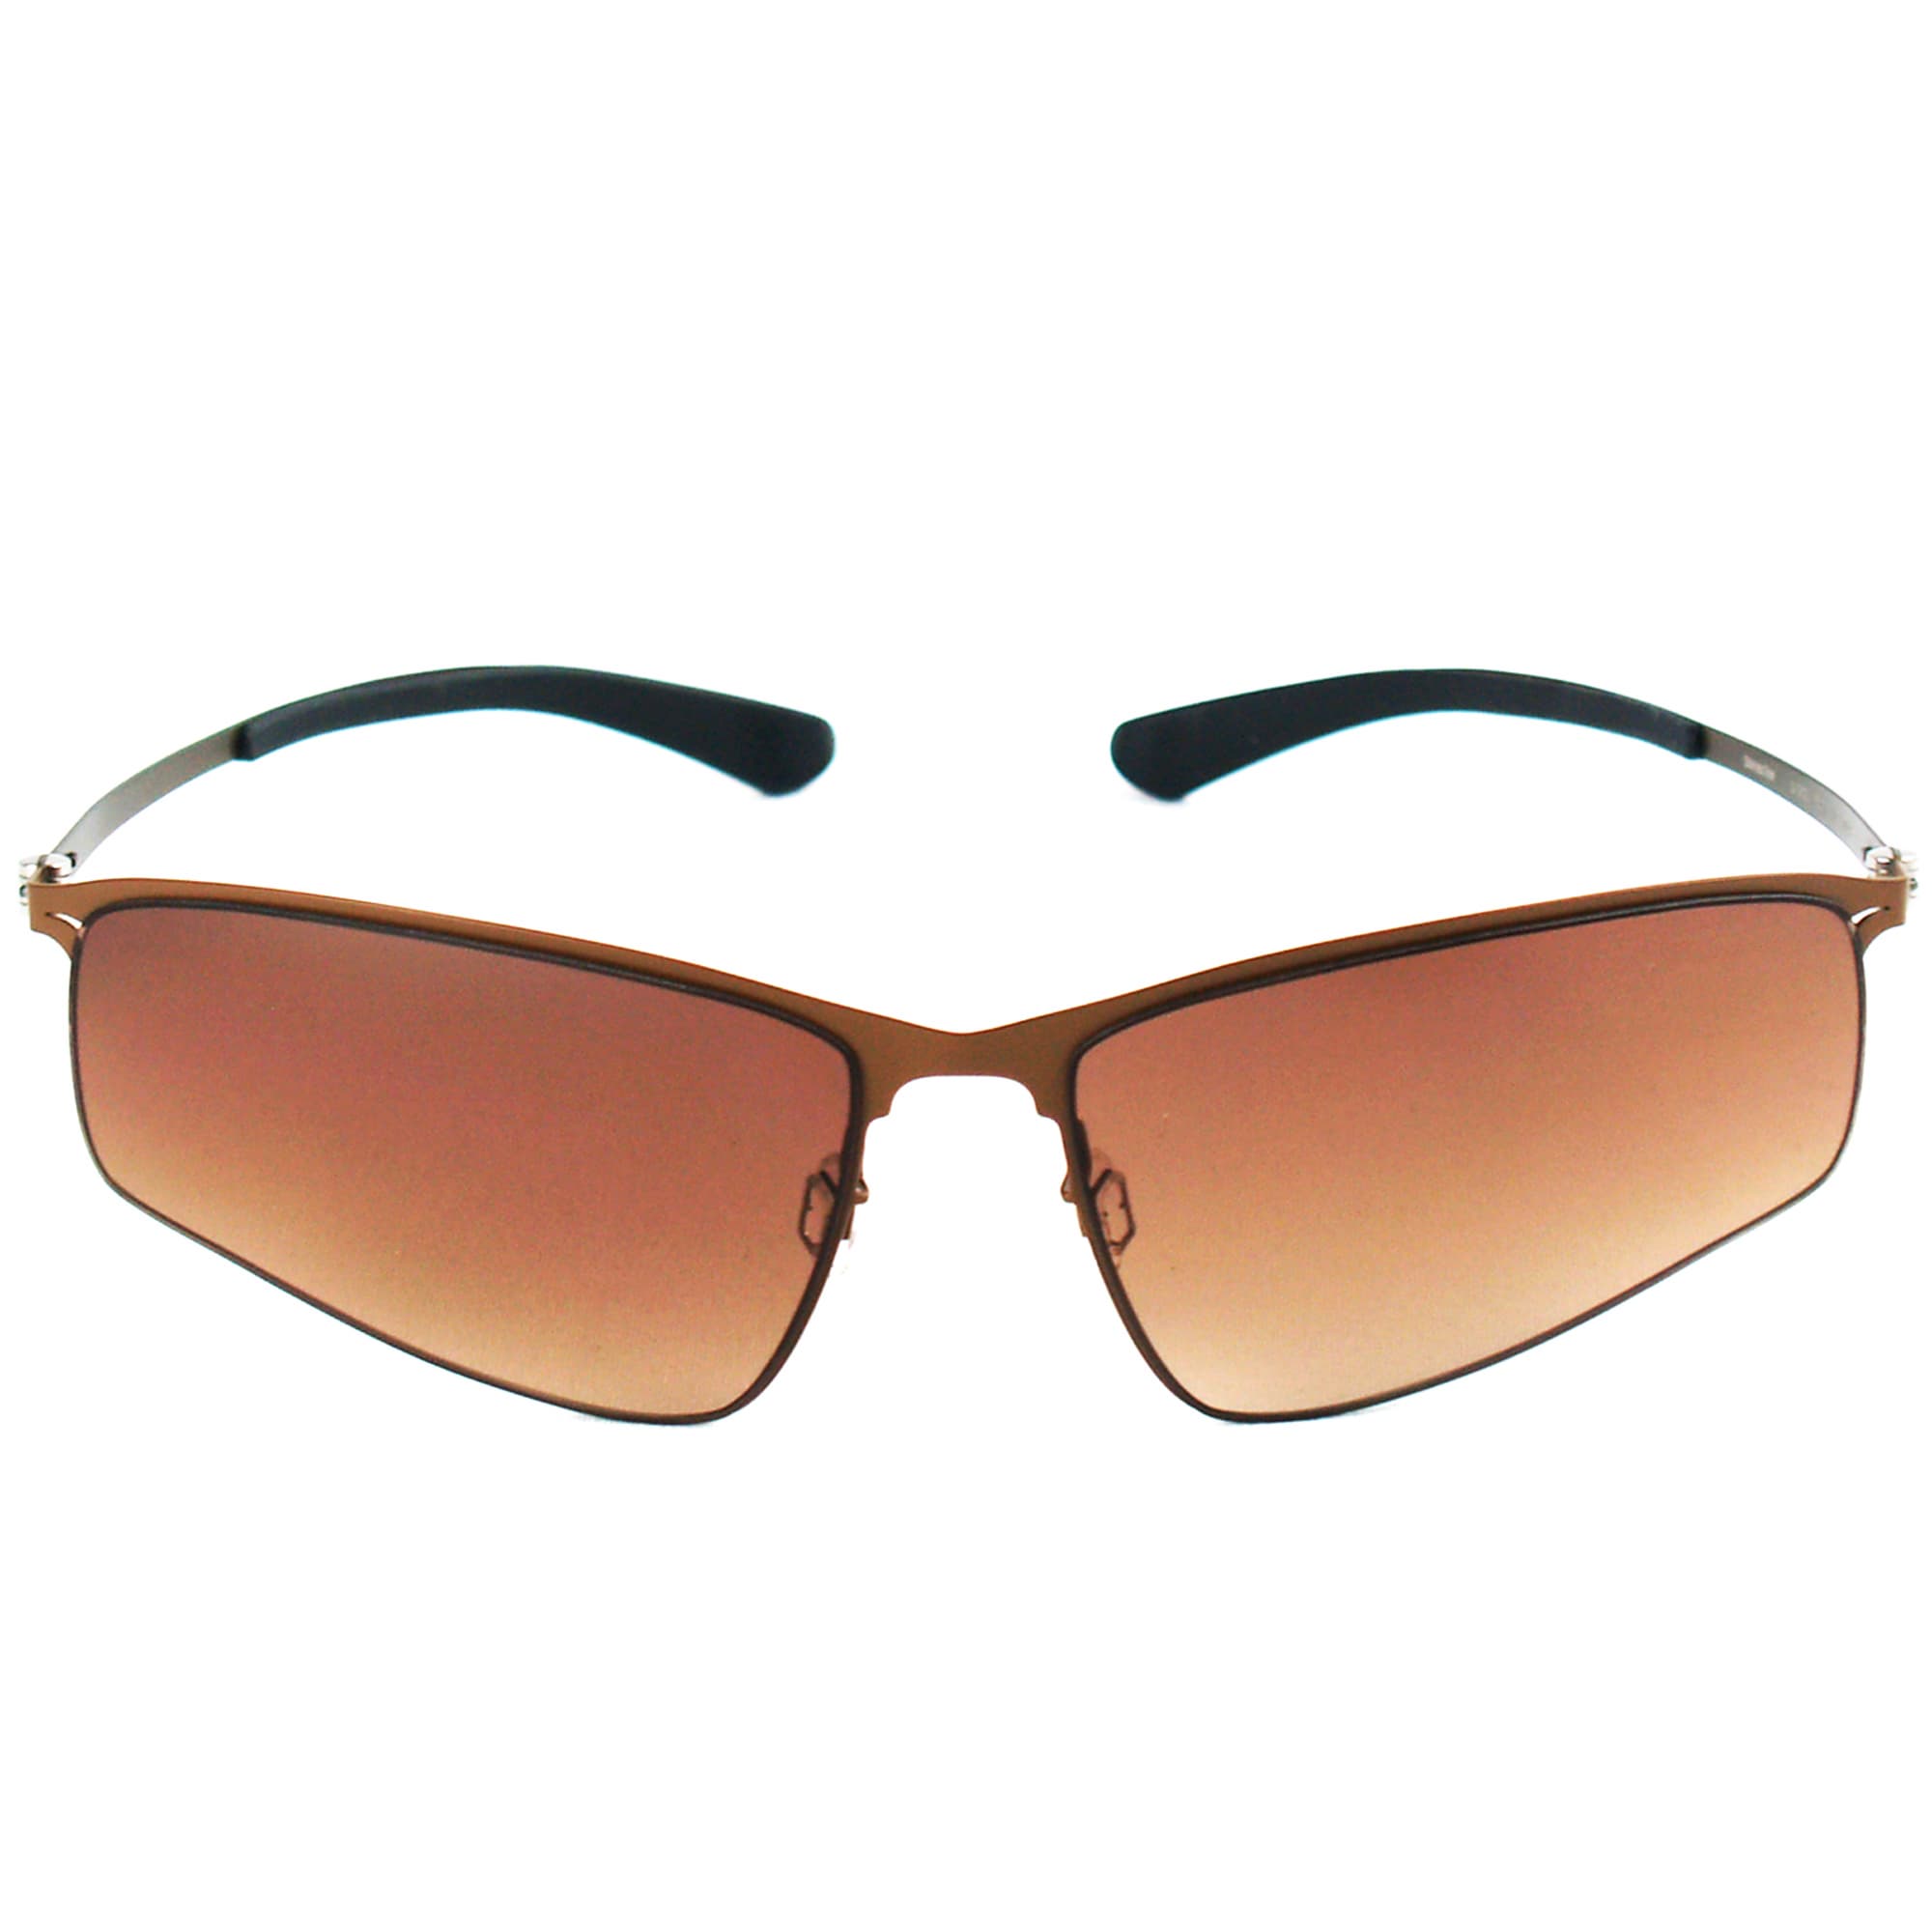 Black MatrixIII  Thin Stainless Steel  Frame Sunglasses